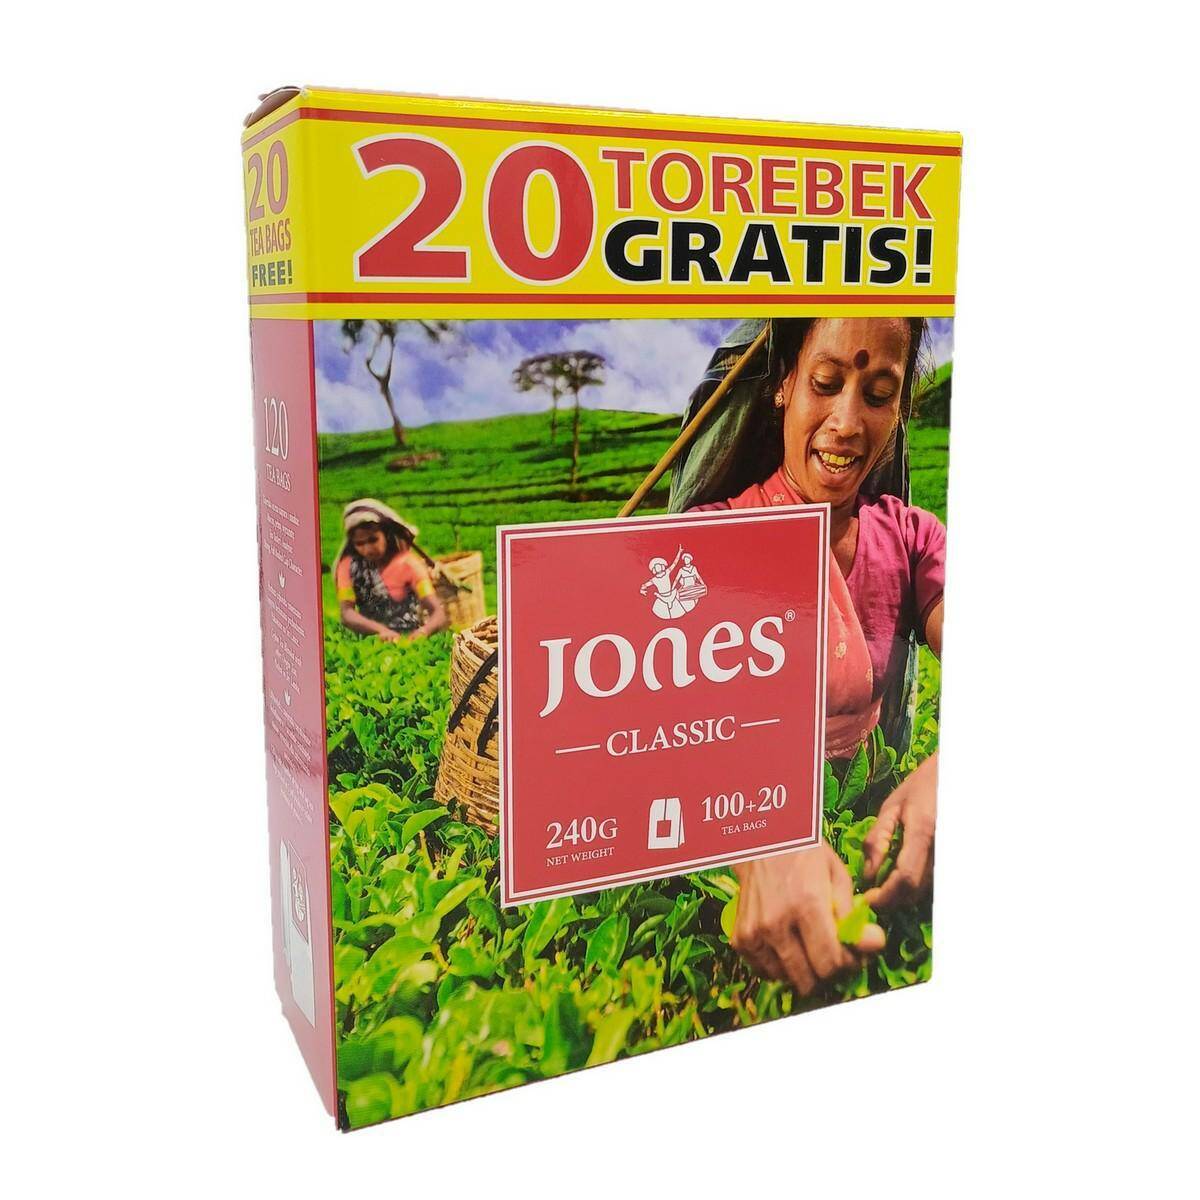 JONES herbata ekspresowa 100+20 torebek [8]